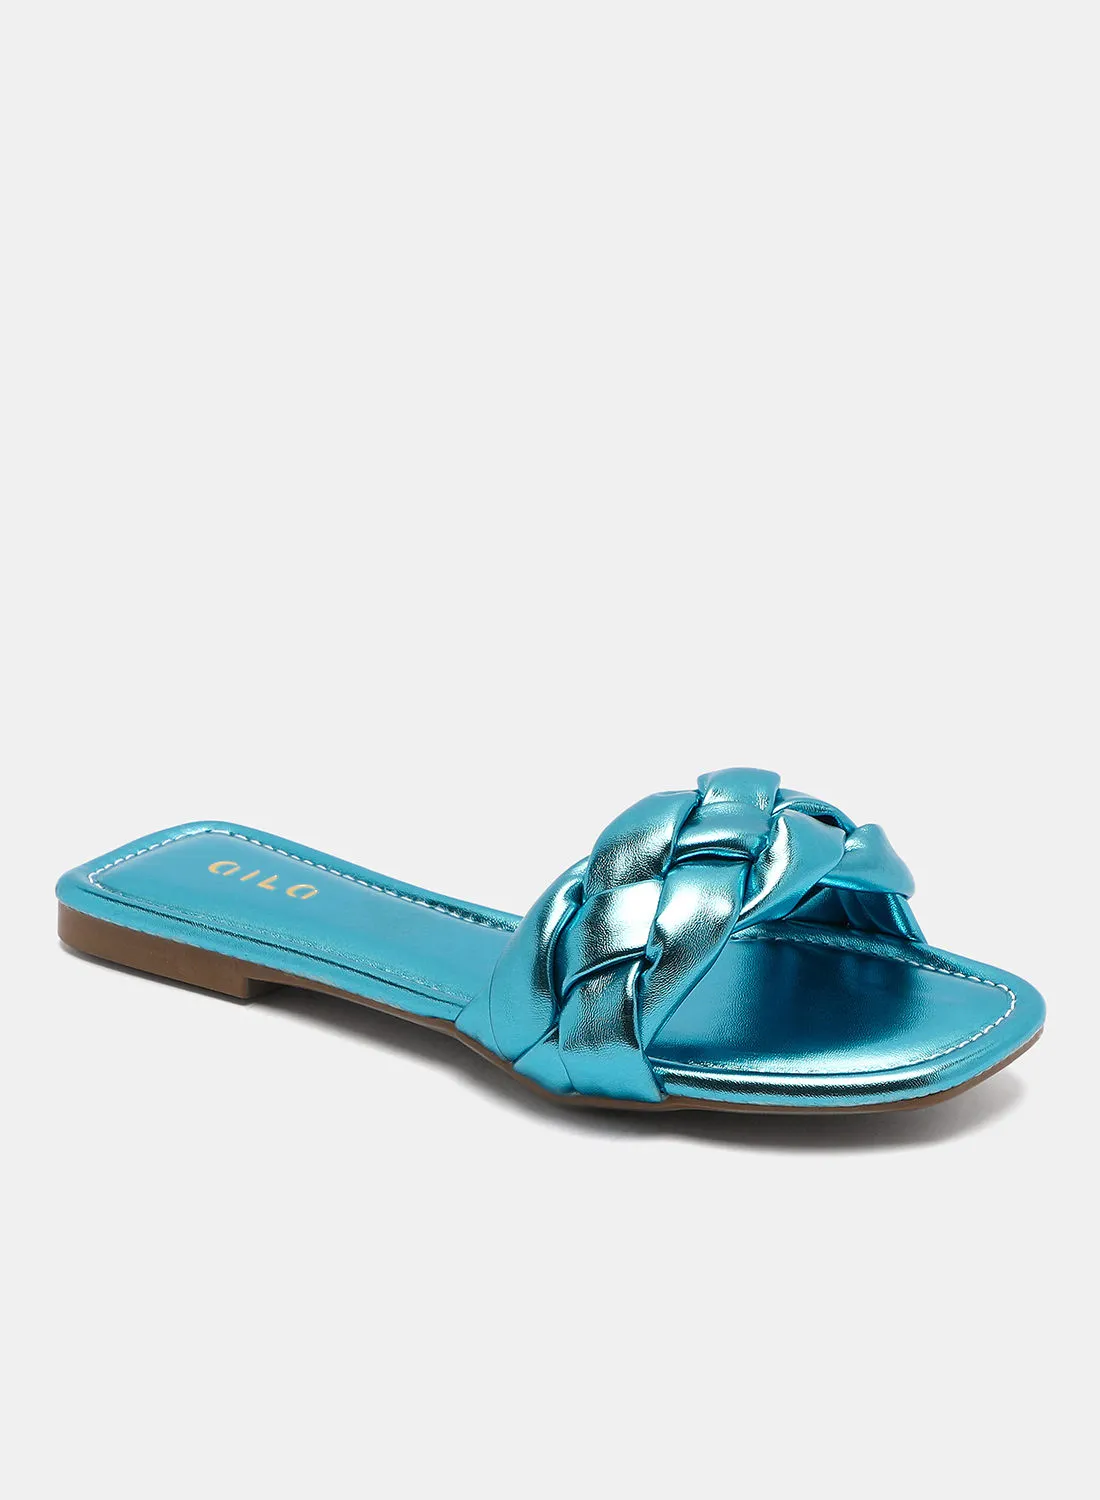 Aila Casual Plain Flat Sandals Blue